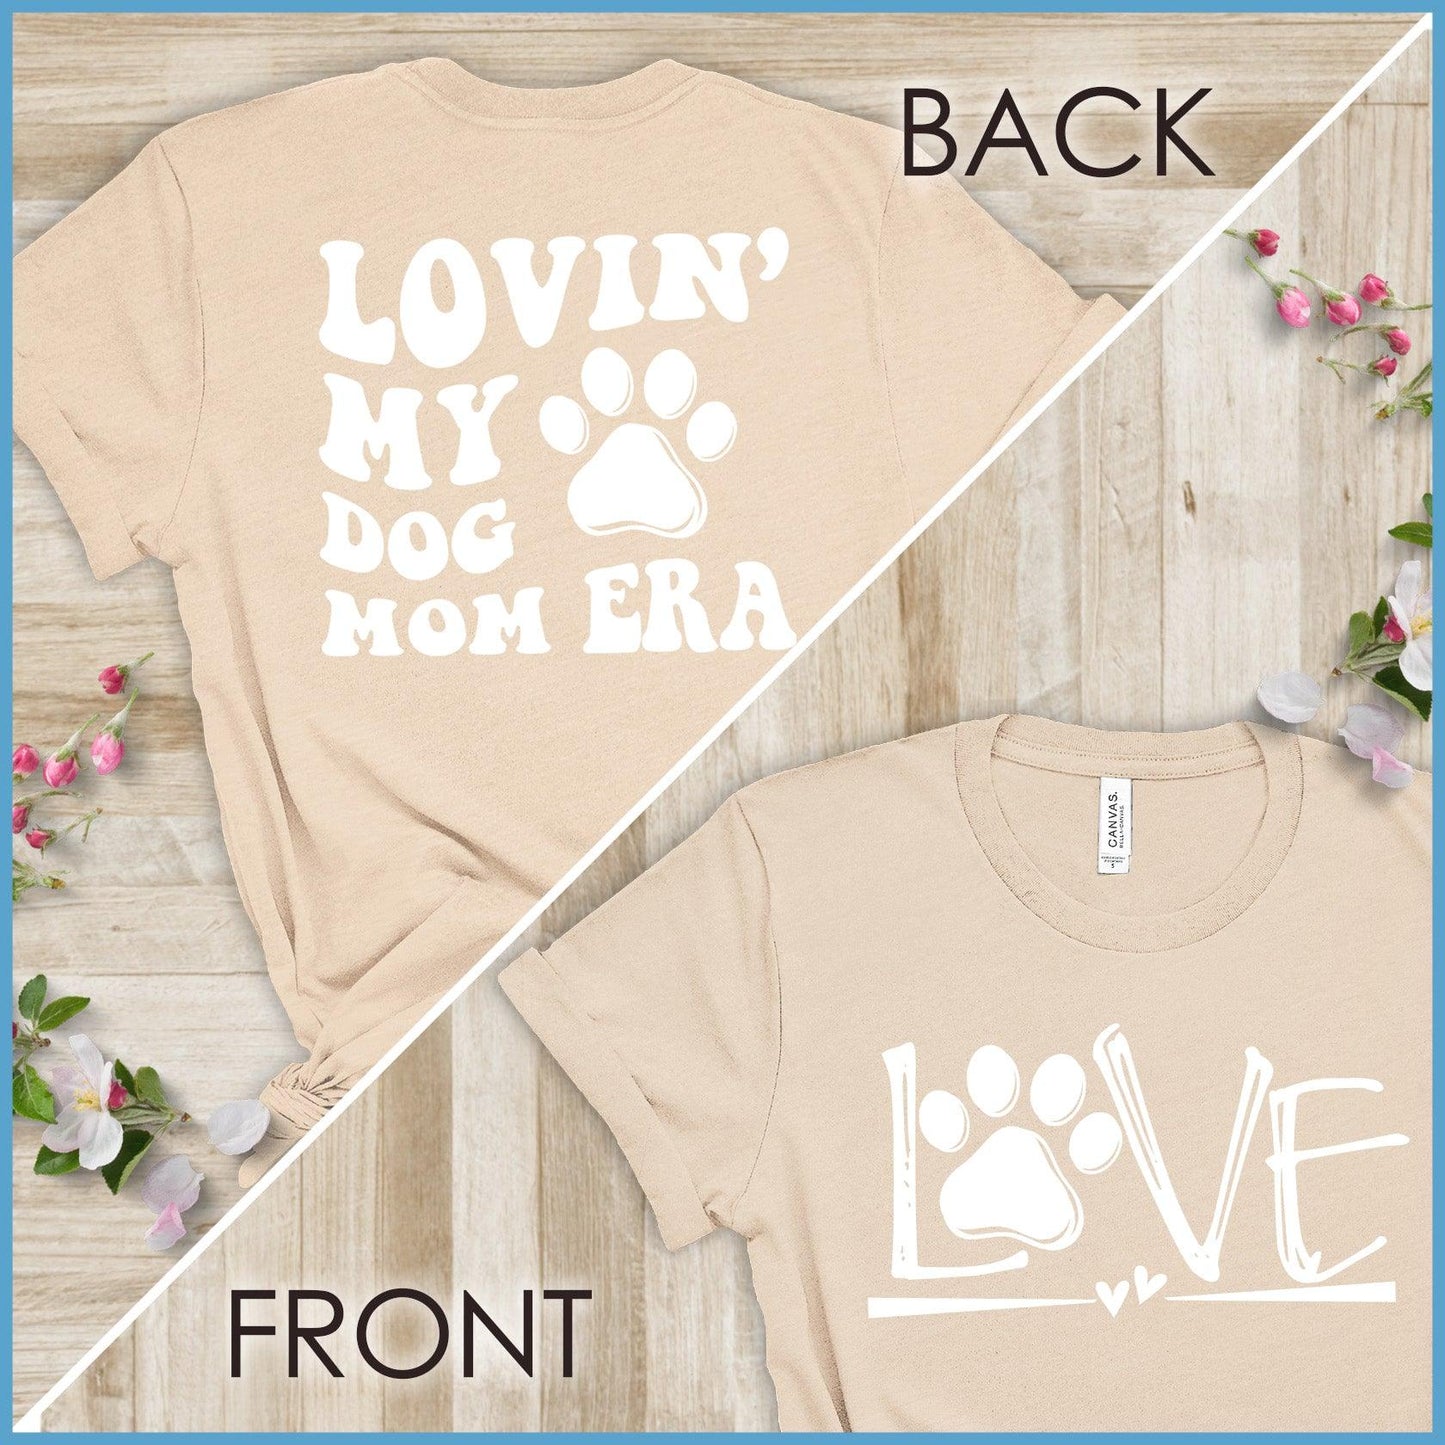 Lovin' My Dog Mom Era, Dog Love - Wavy T-Shirt Version 2